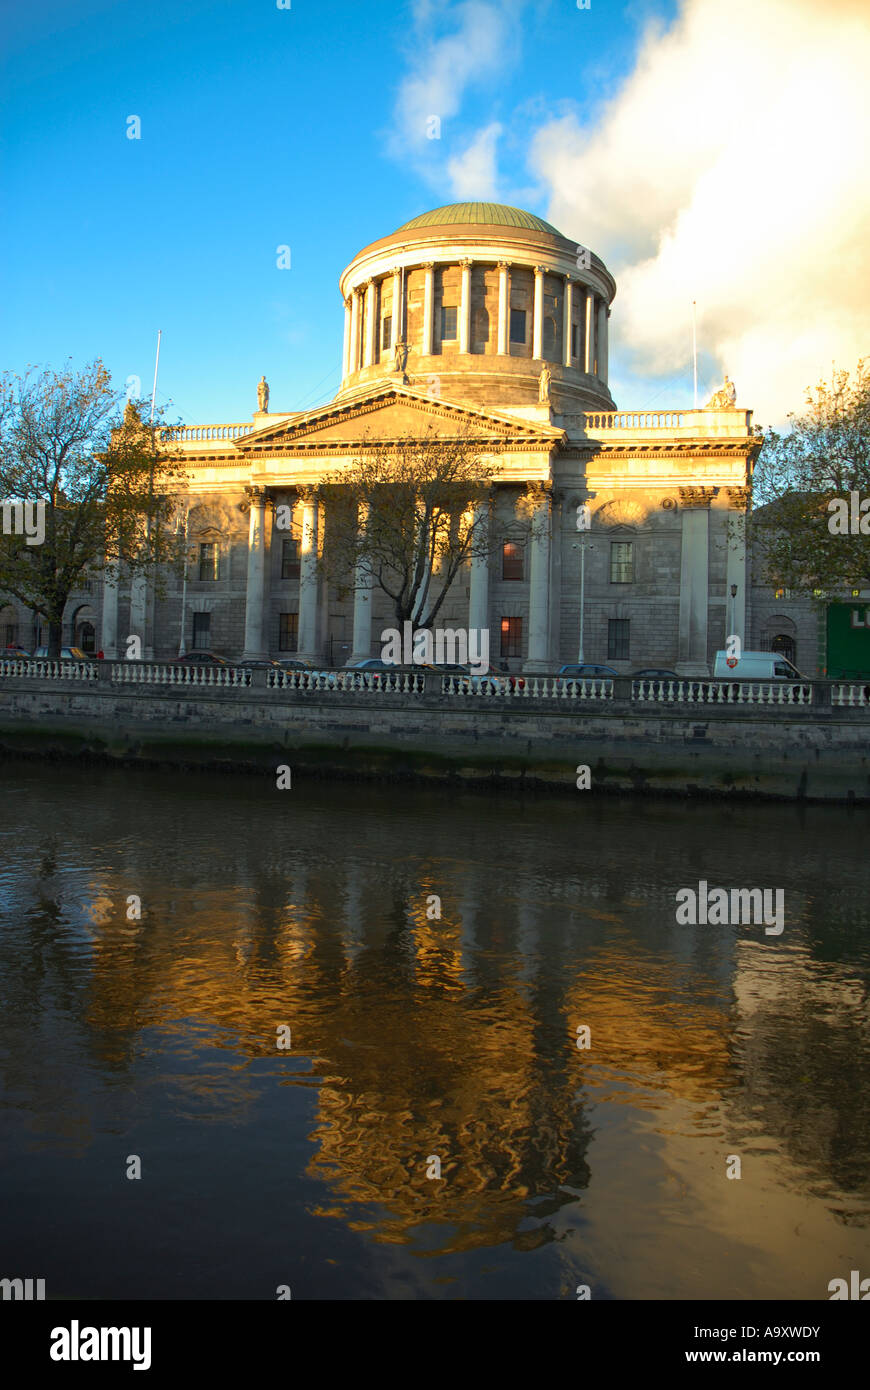 The Four Courts Building, Dublin, Ireland Stock Photo